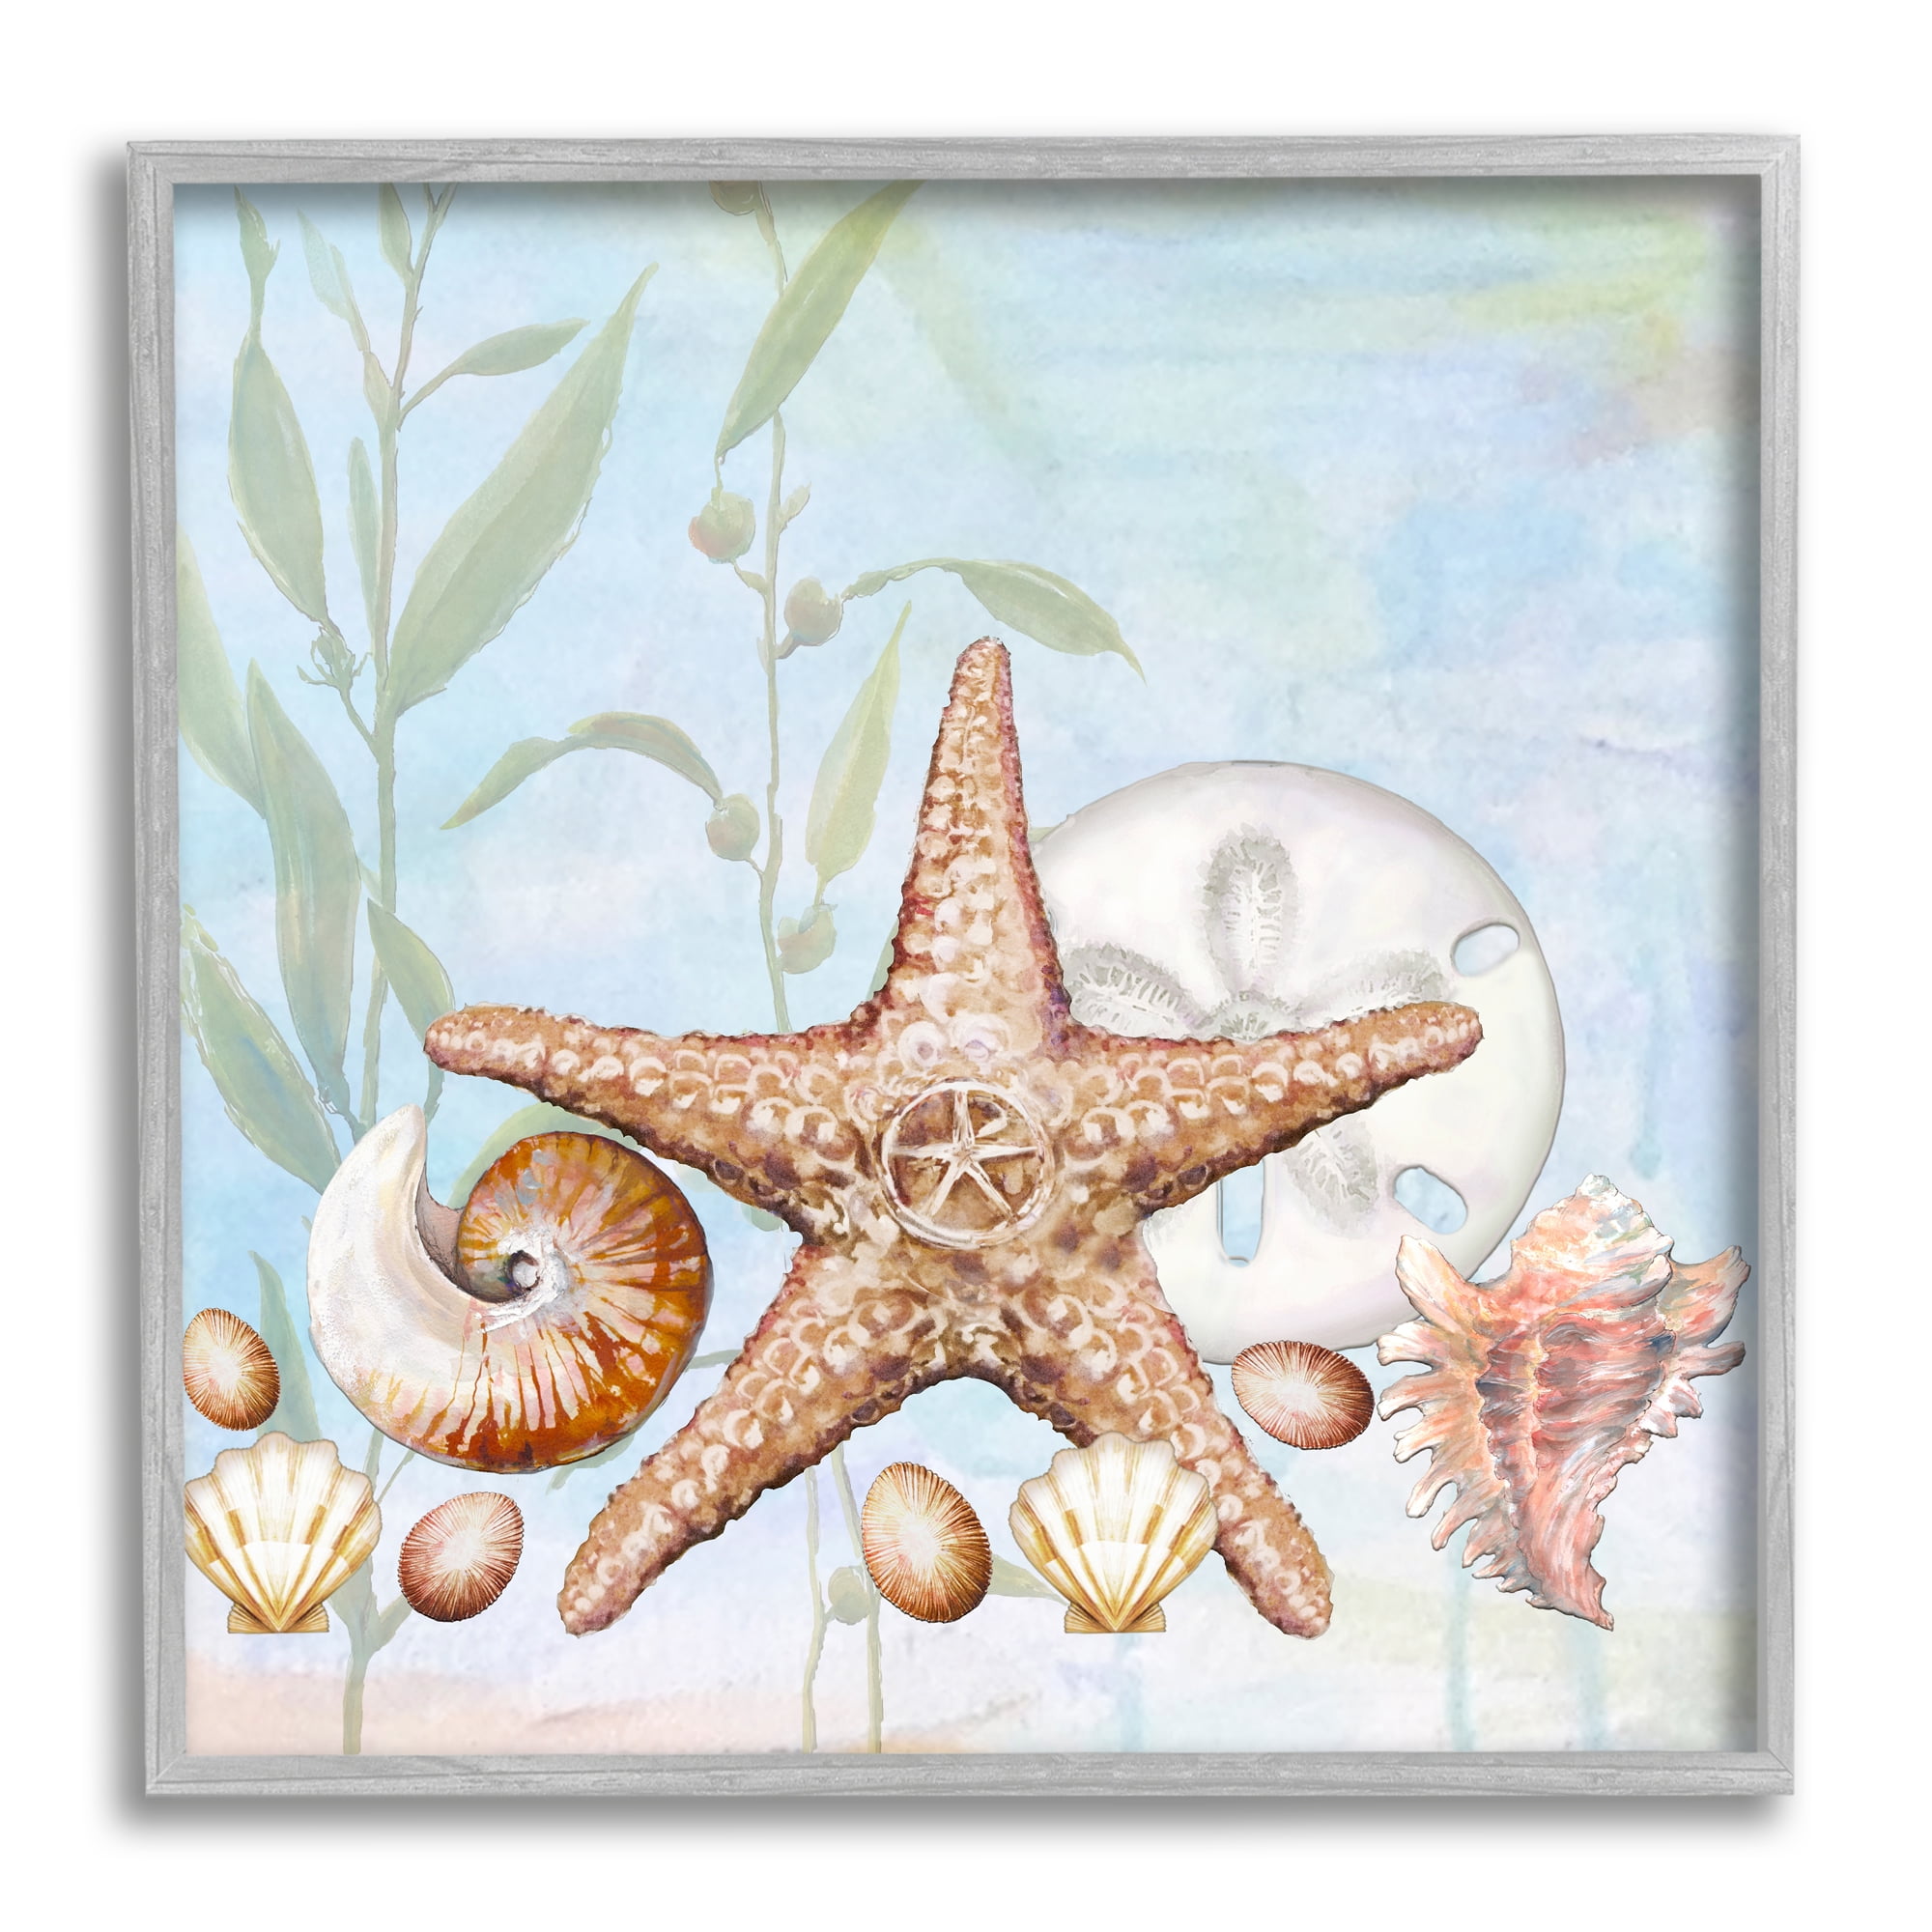 Home Decor Poster Starfish And Seashell On The Art/Canvas Print Wall Art 